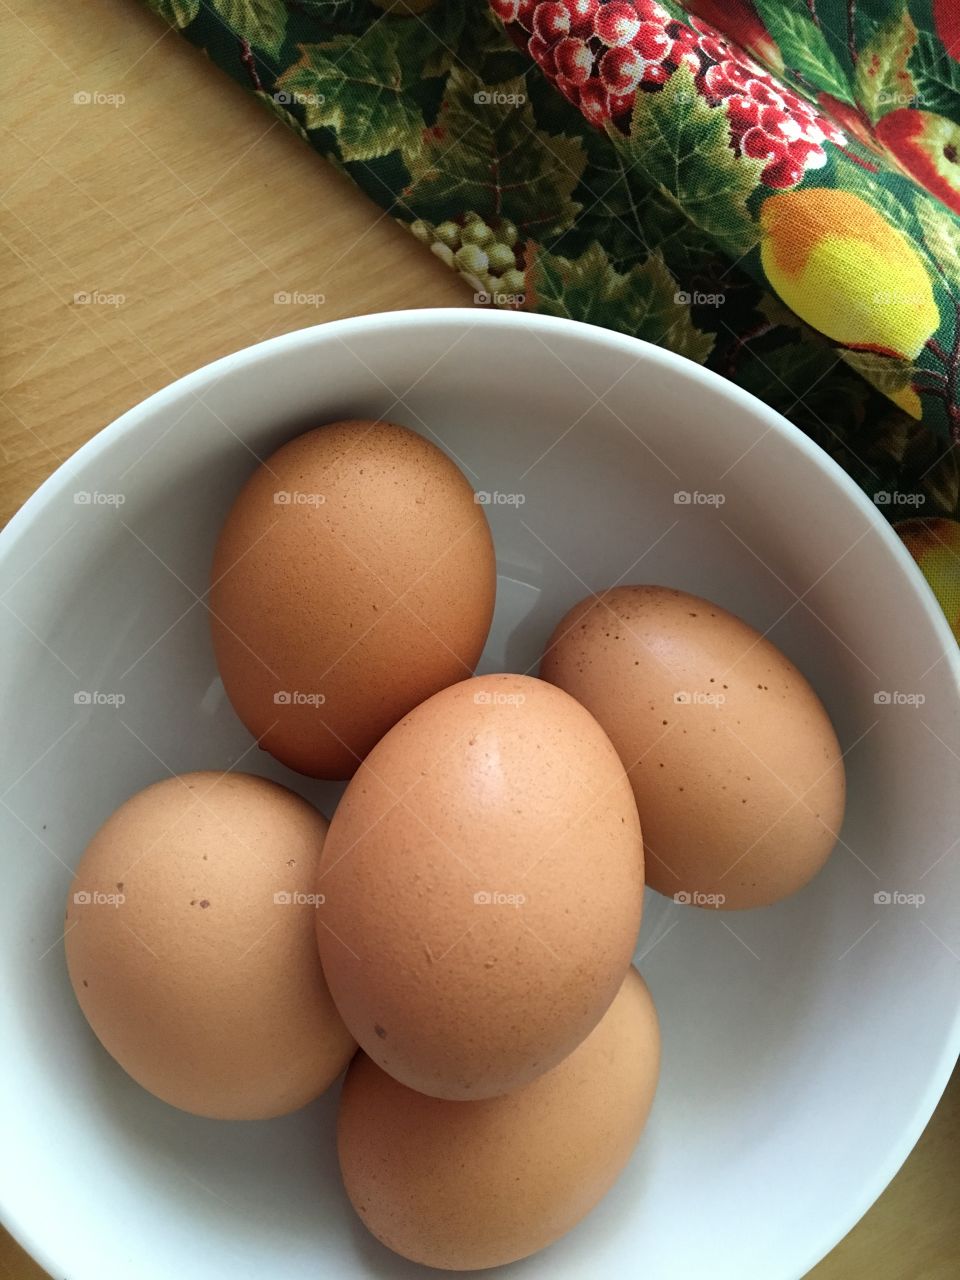 Close-up of farm fresh eggs